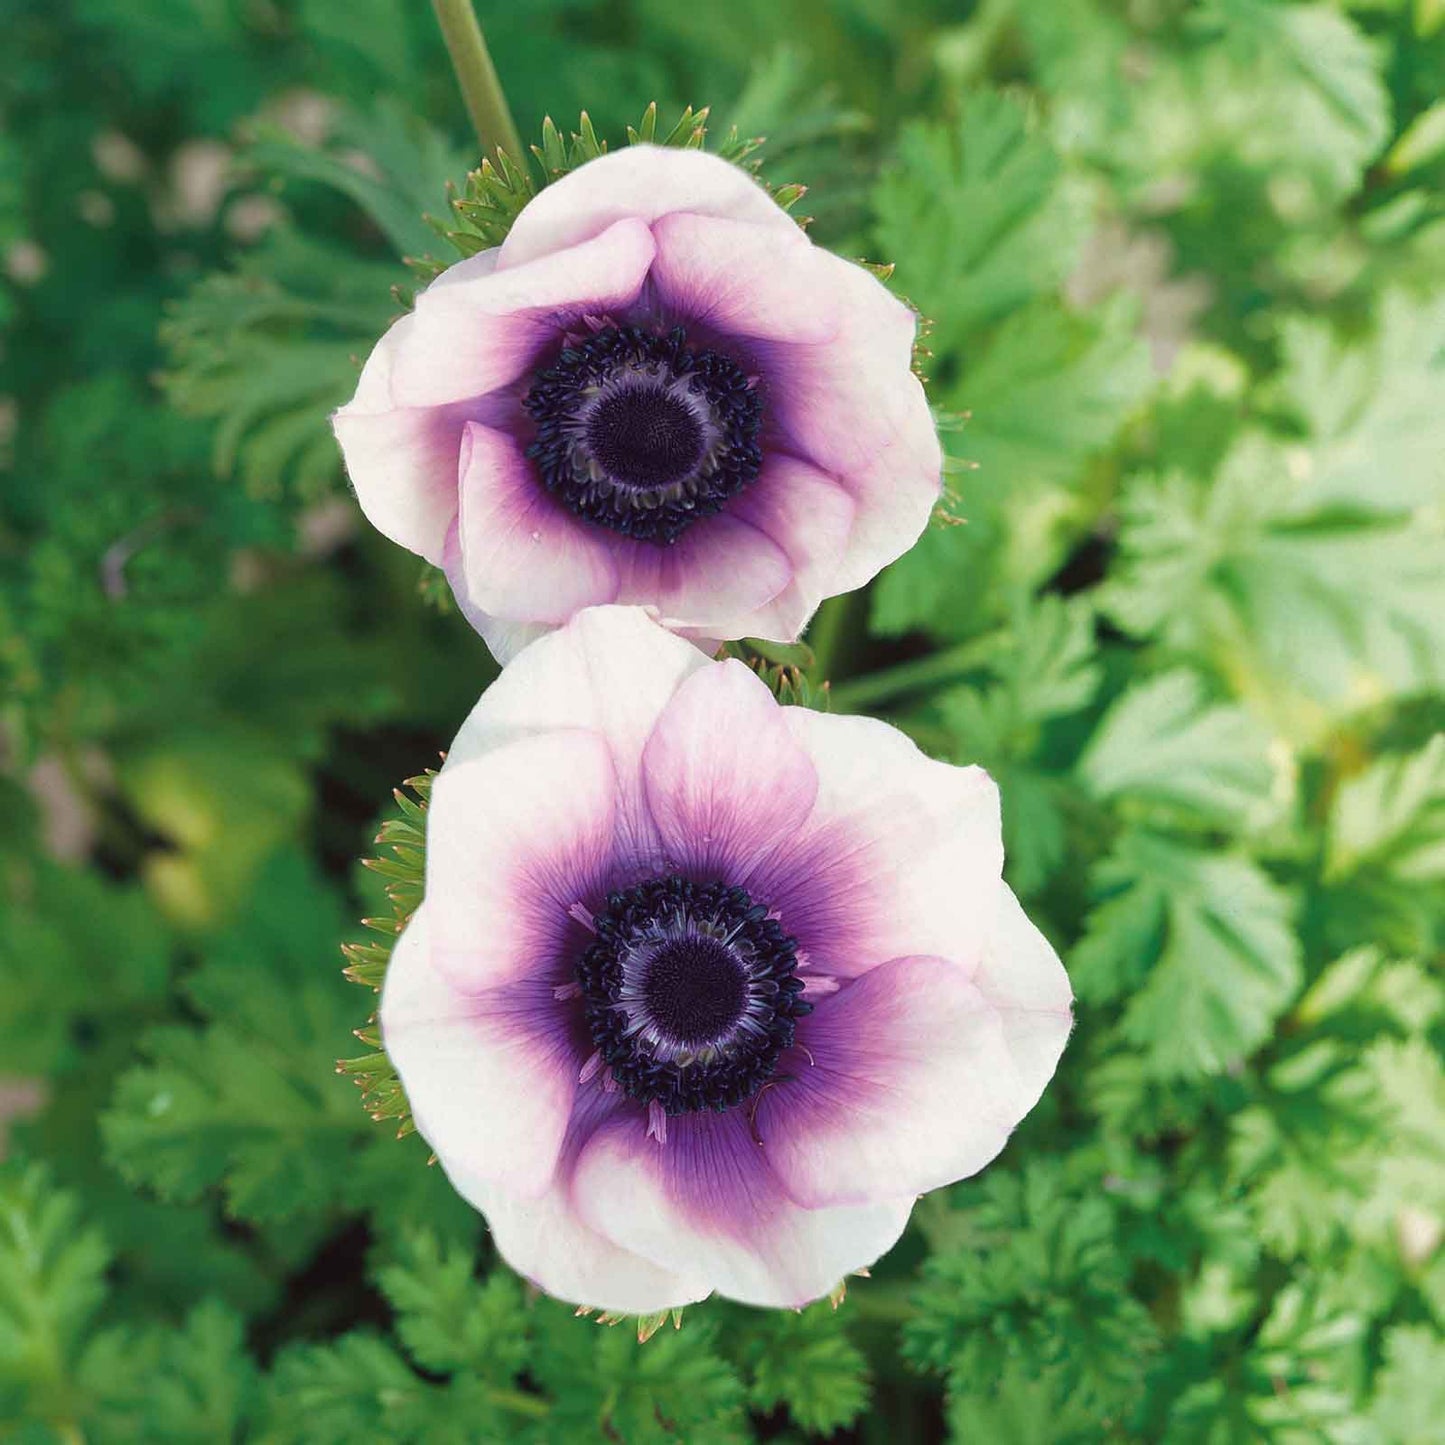 Pastel Violet - Anemone Bulbs